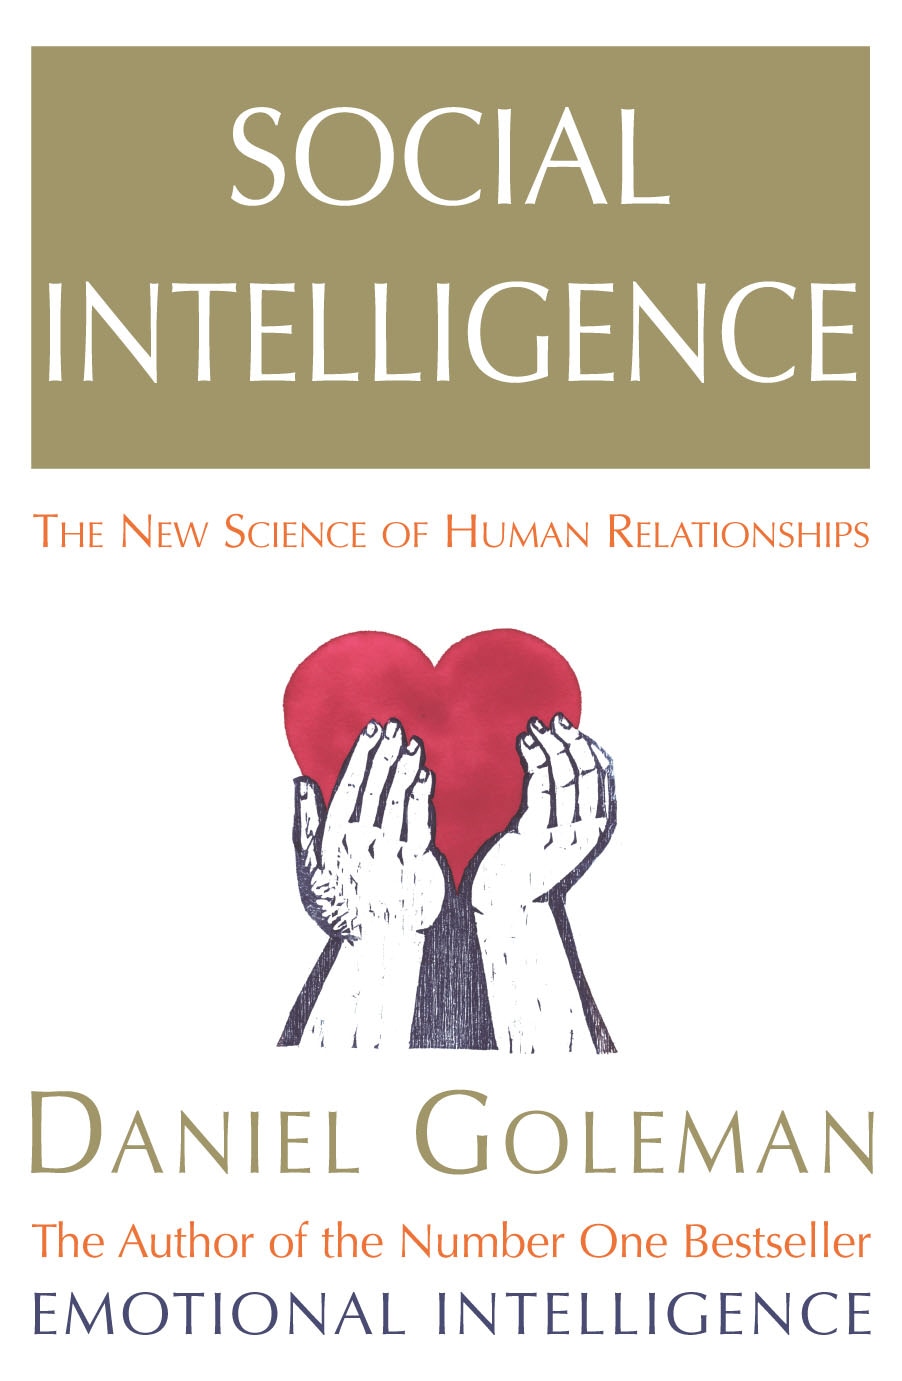 Book “Social Intelligence” by Daniel Goleman — September 6, 2007